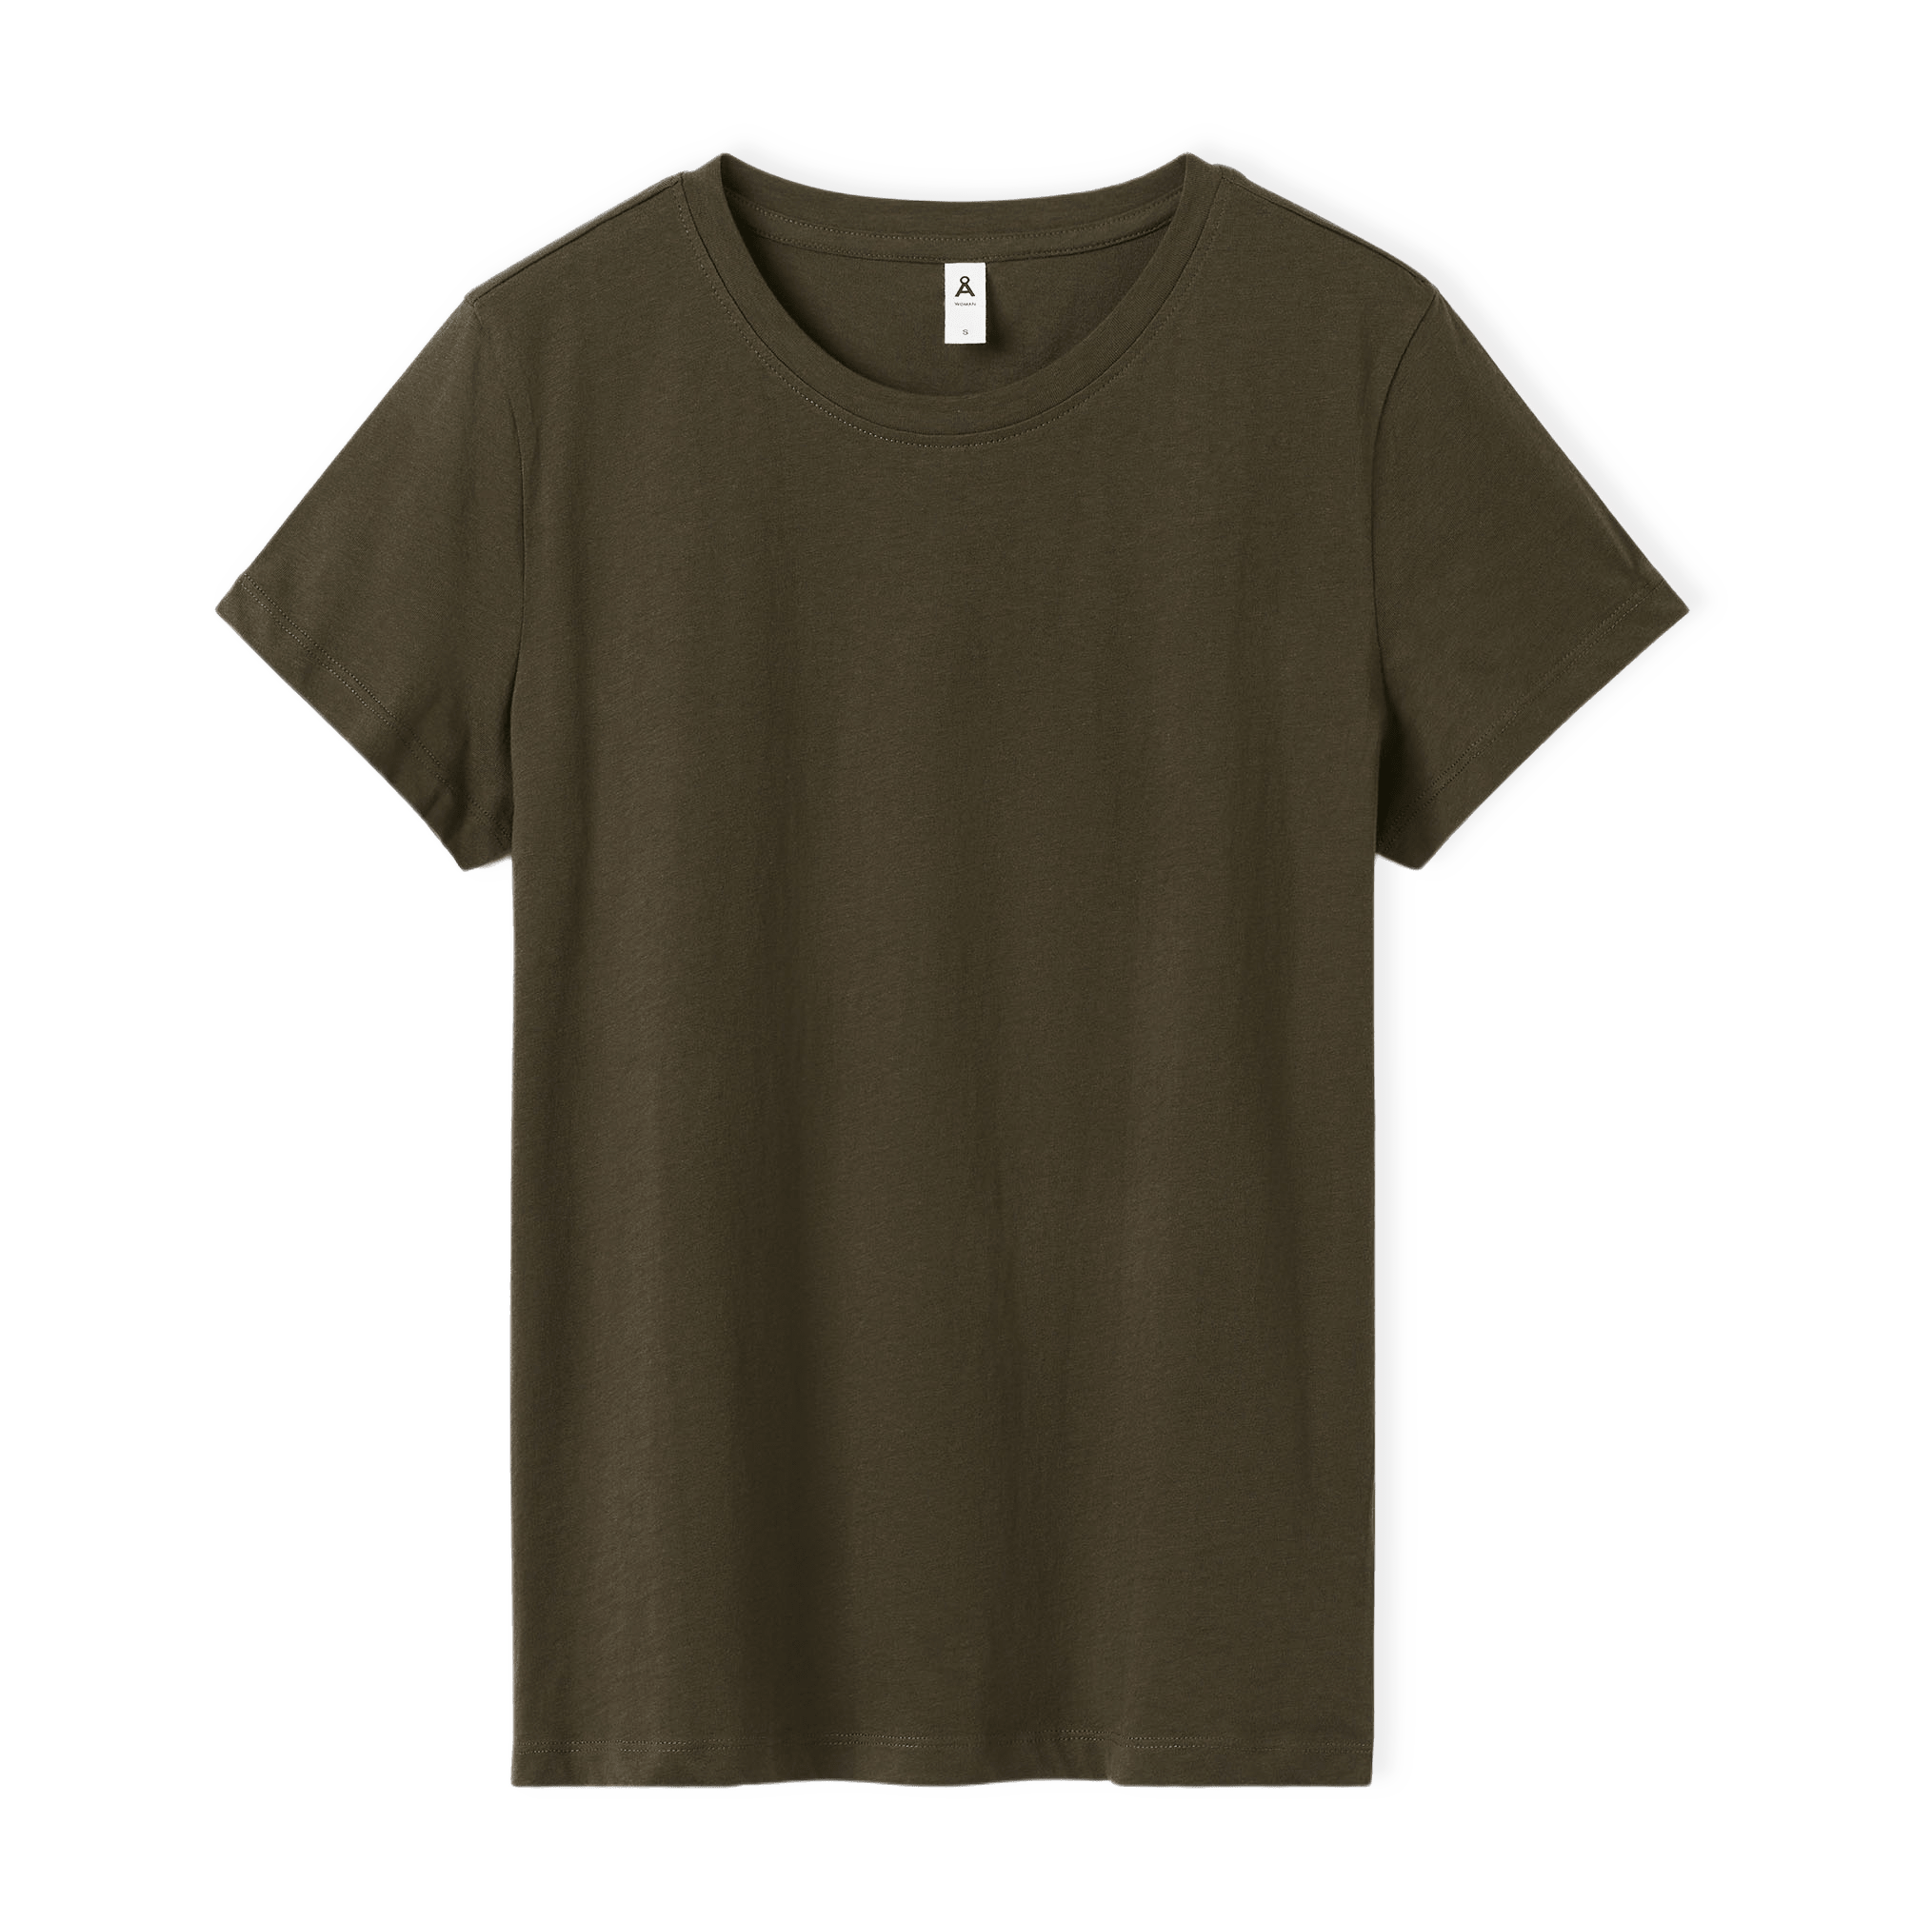 T-shirt i ekologisk bomull ANNA från Åhléns